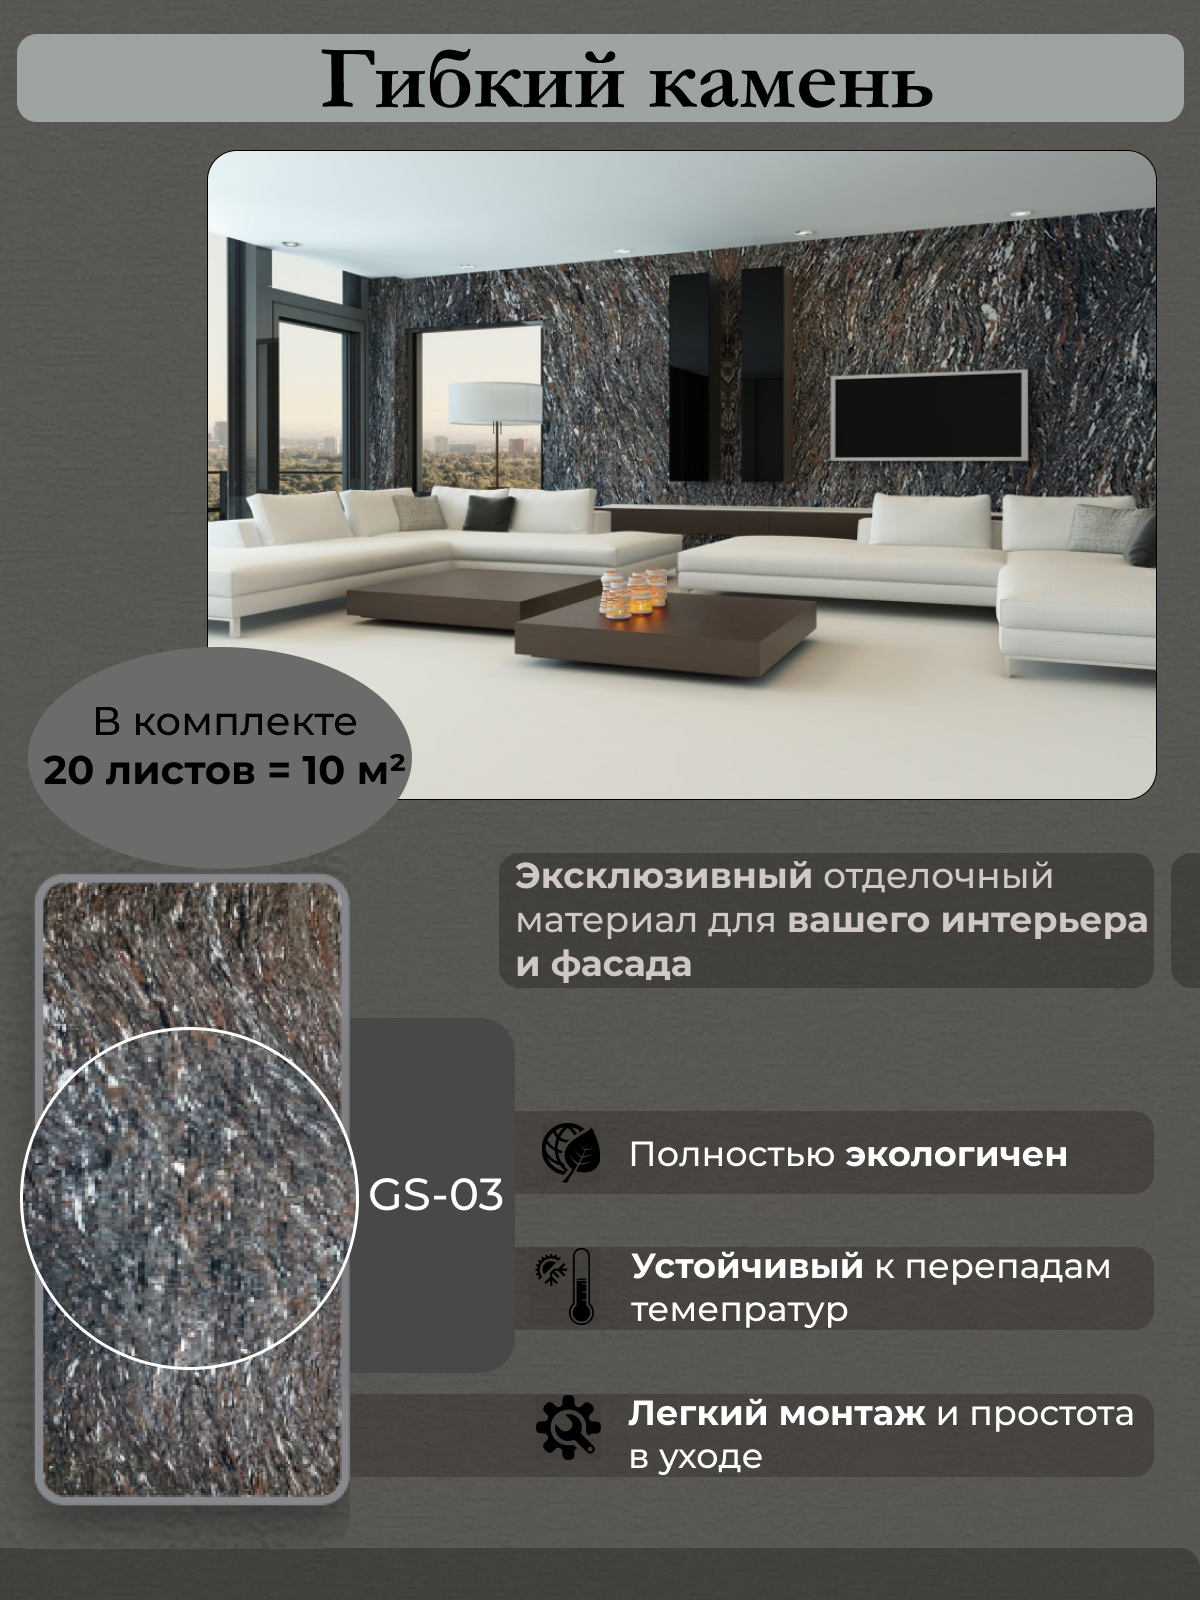 Гибкий камень Сибирский мрамор GS-03 10м2 223228